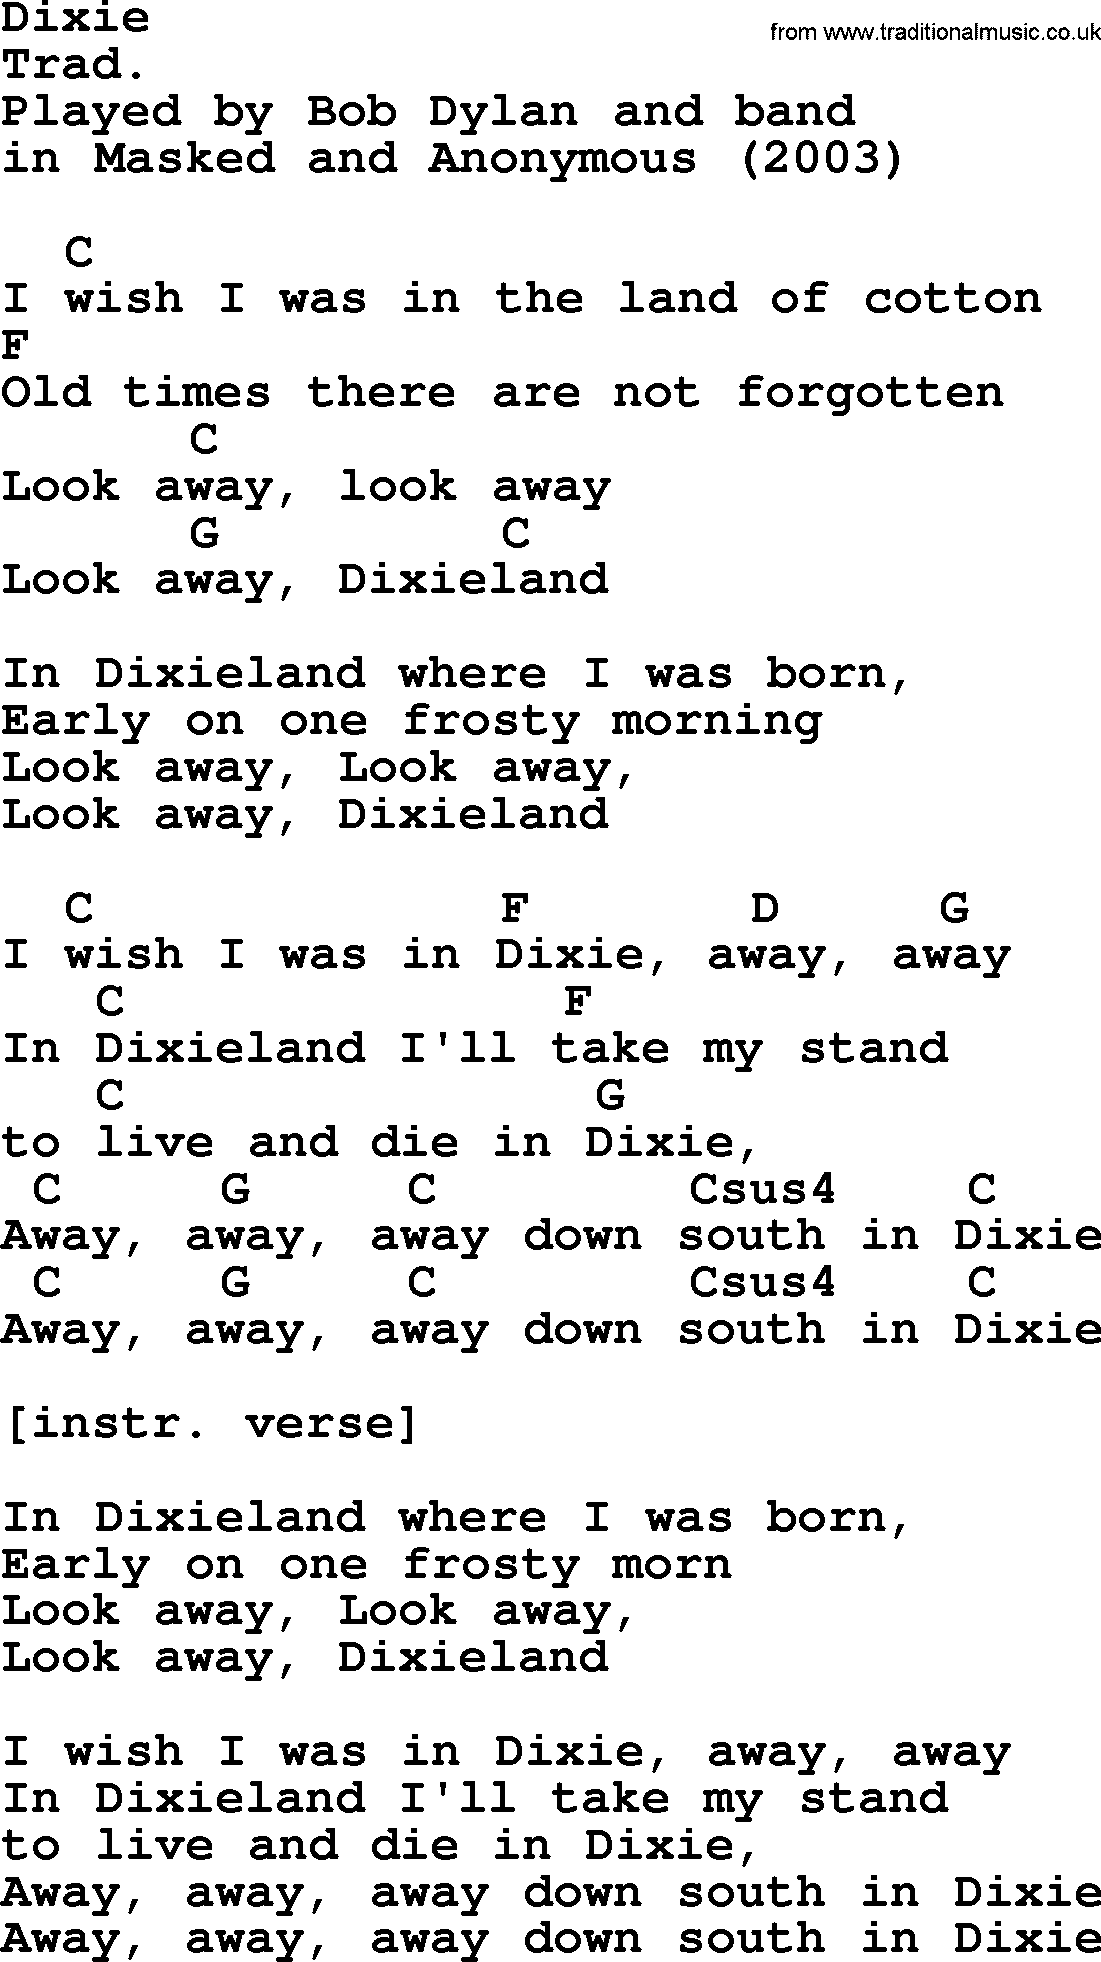 Bob Dylan song, lyrics with chords - Dixie